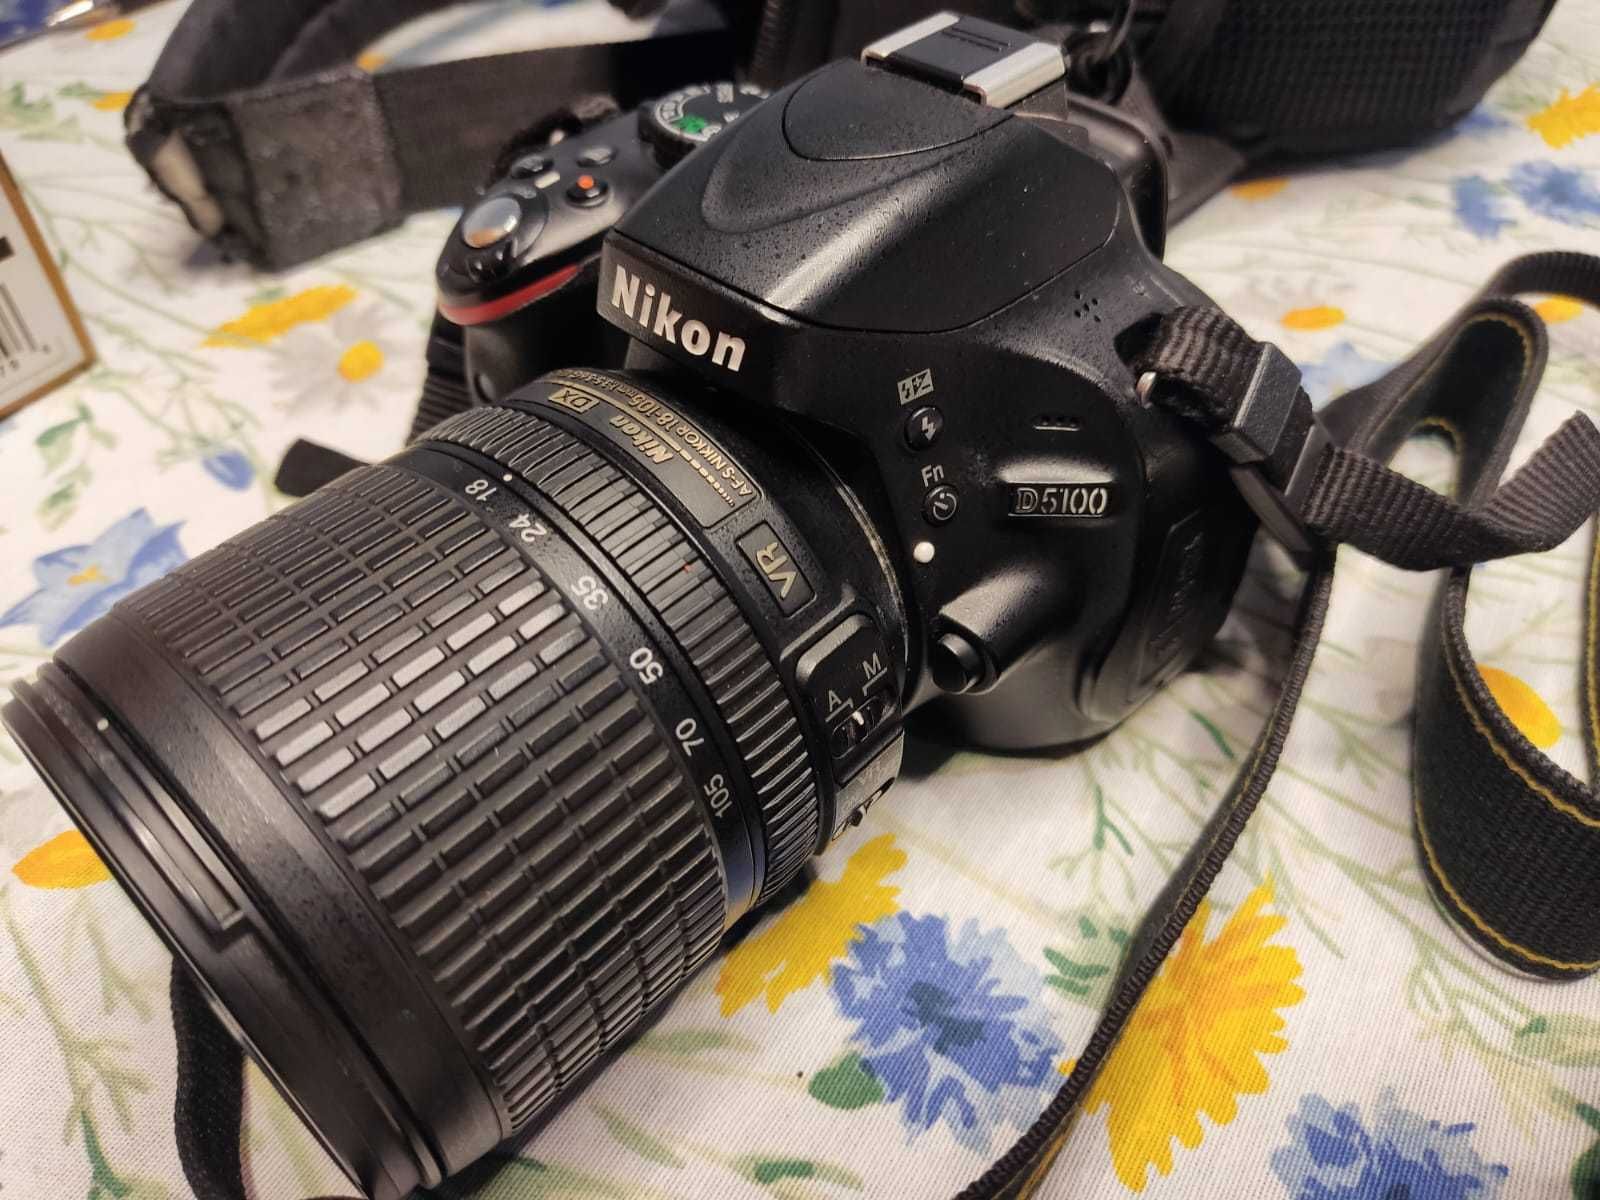 Aparat Nikon D5100 z obiektywem Nikor 18-105